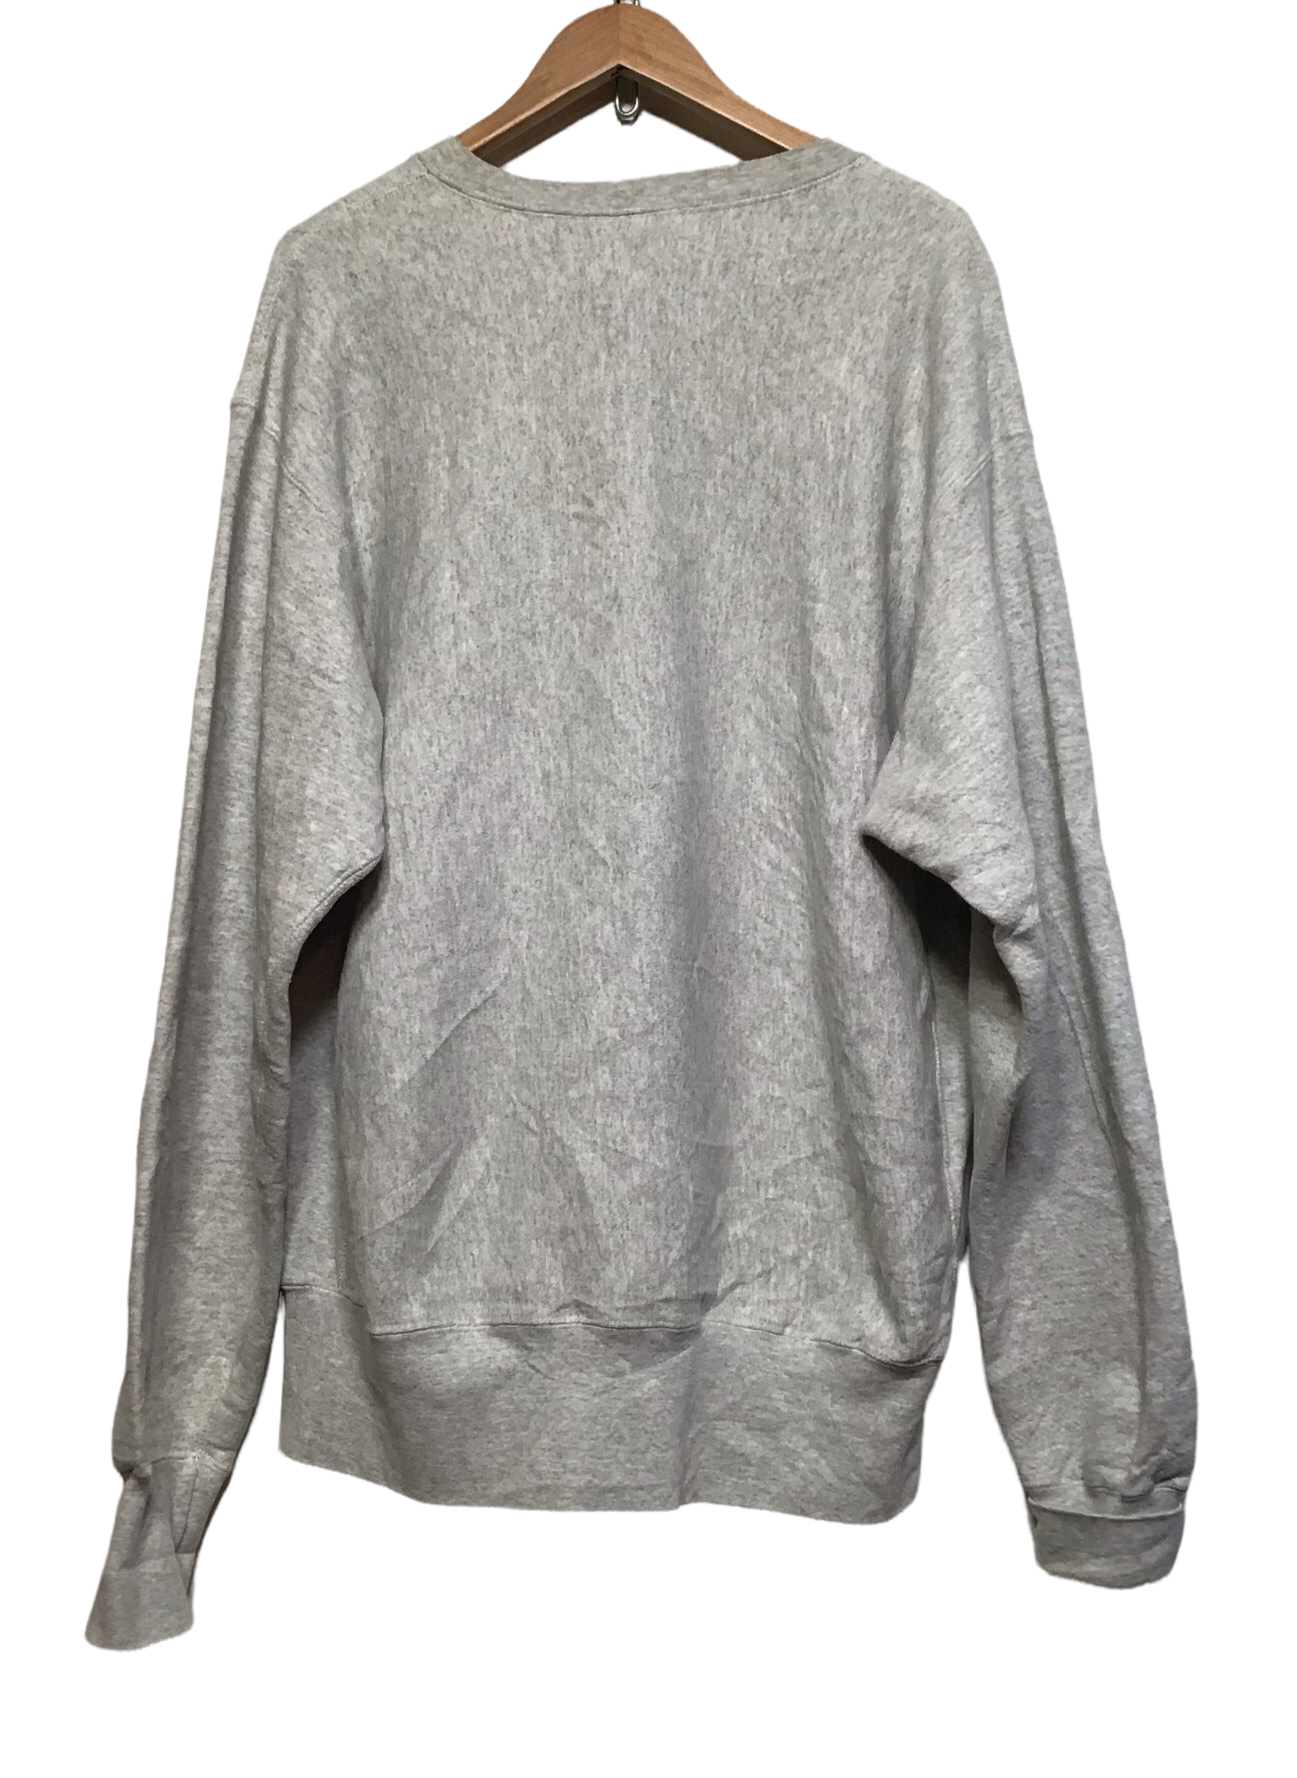 Lee Grey College Sweatshirt (Size XL)